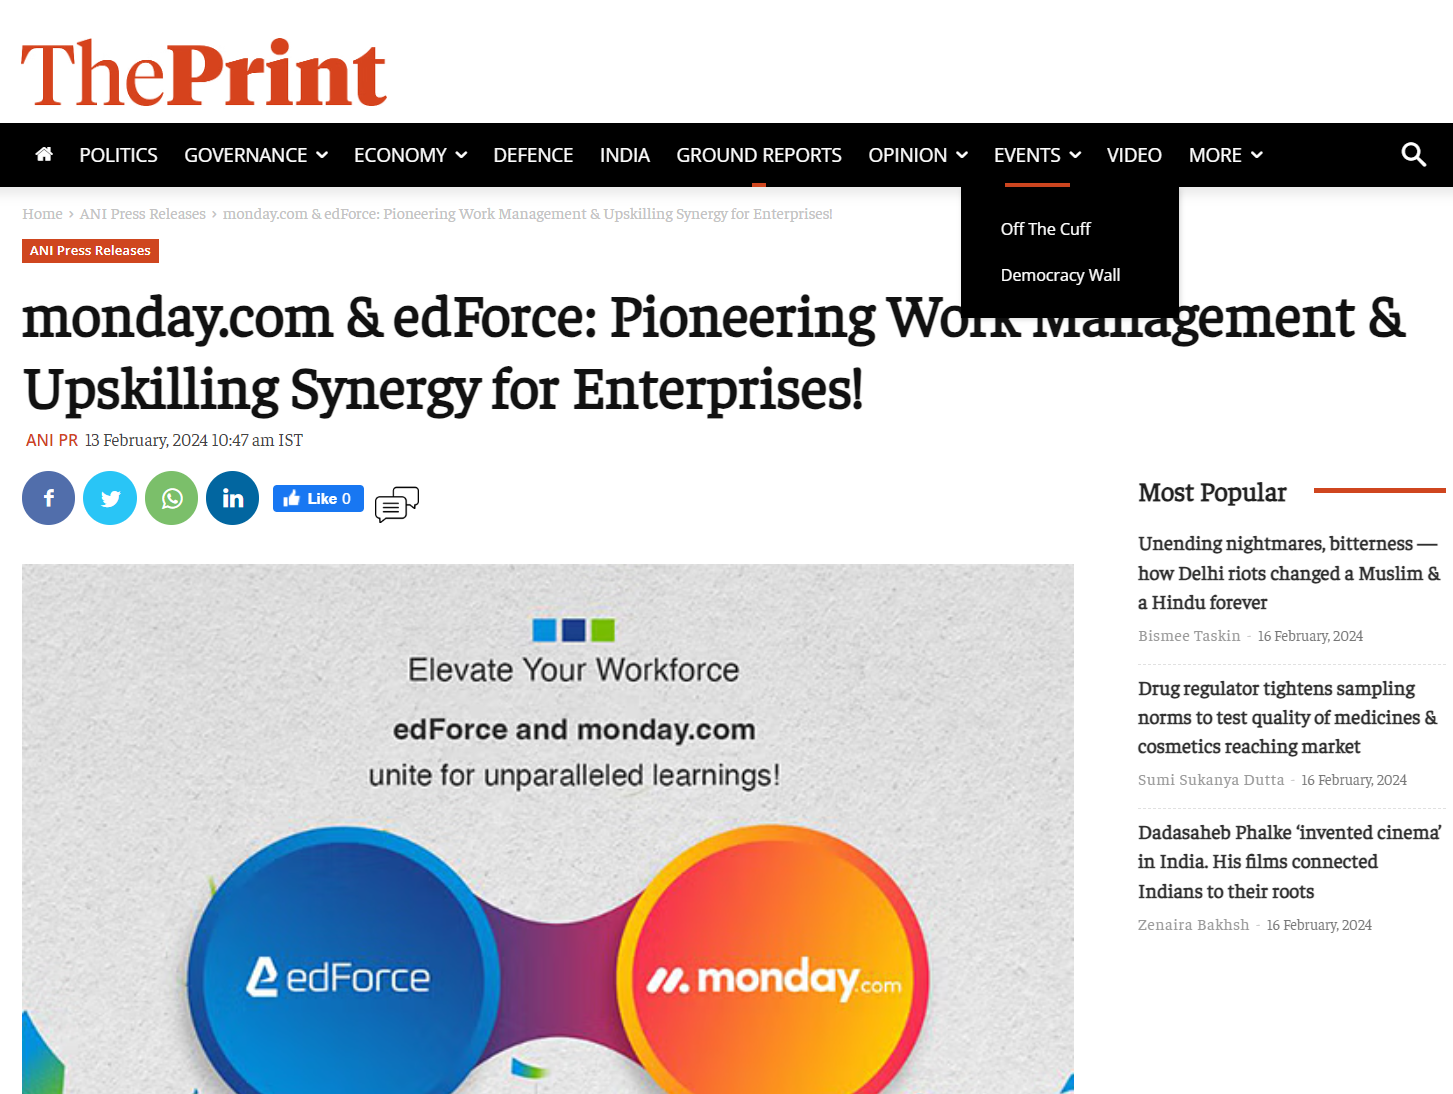 monday.com & edForce Pioneering Work Management & Upskilling Synergy for Enterprises